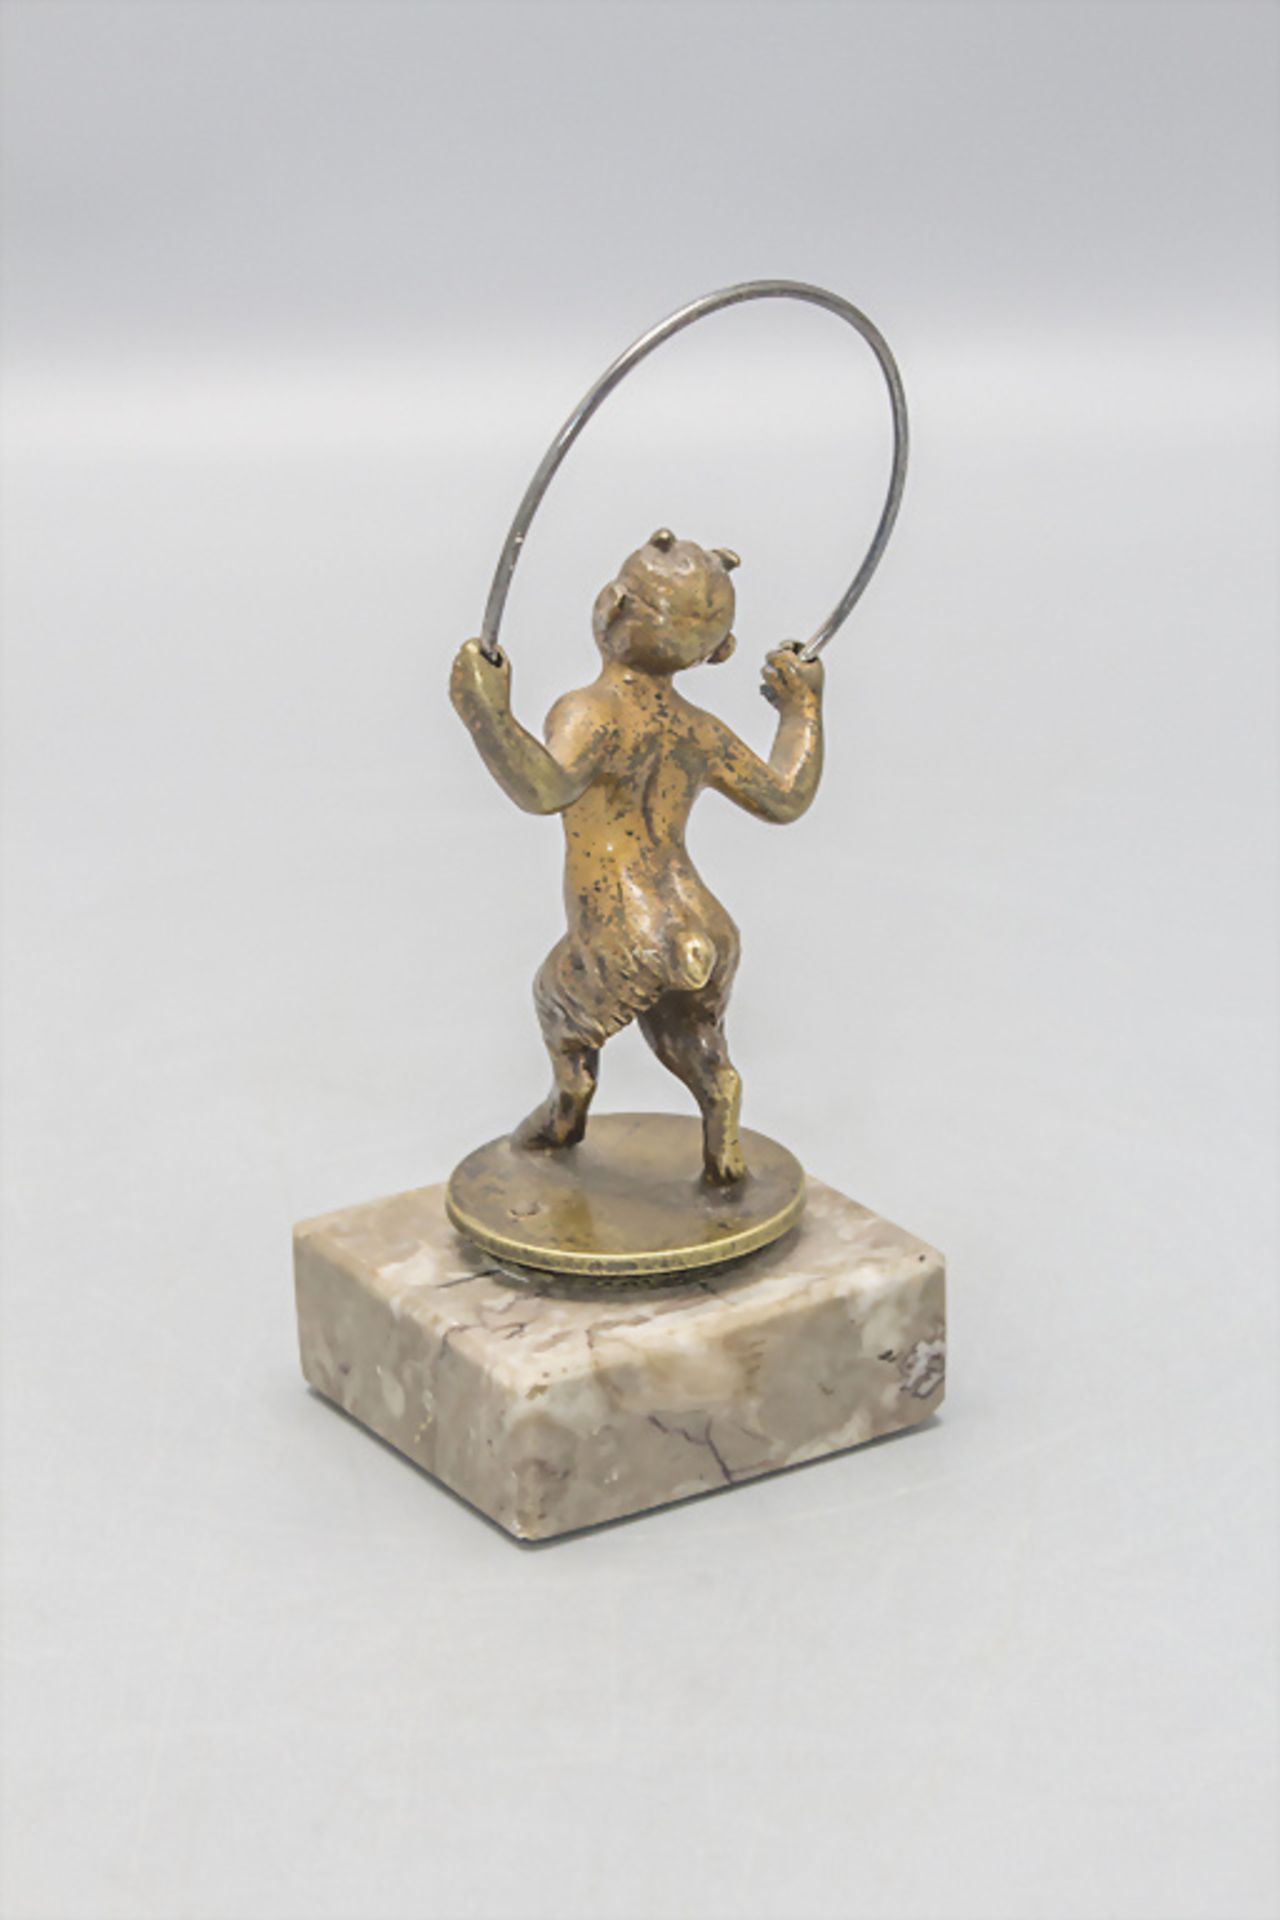 Kleiner Bronze Satyr / Faun / A bronze figure of a satyr, um 1900 - Image 3 of 4